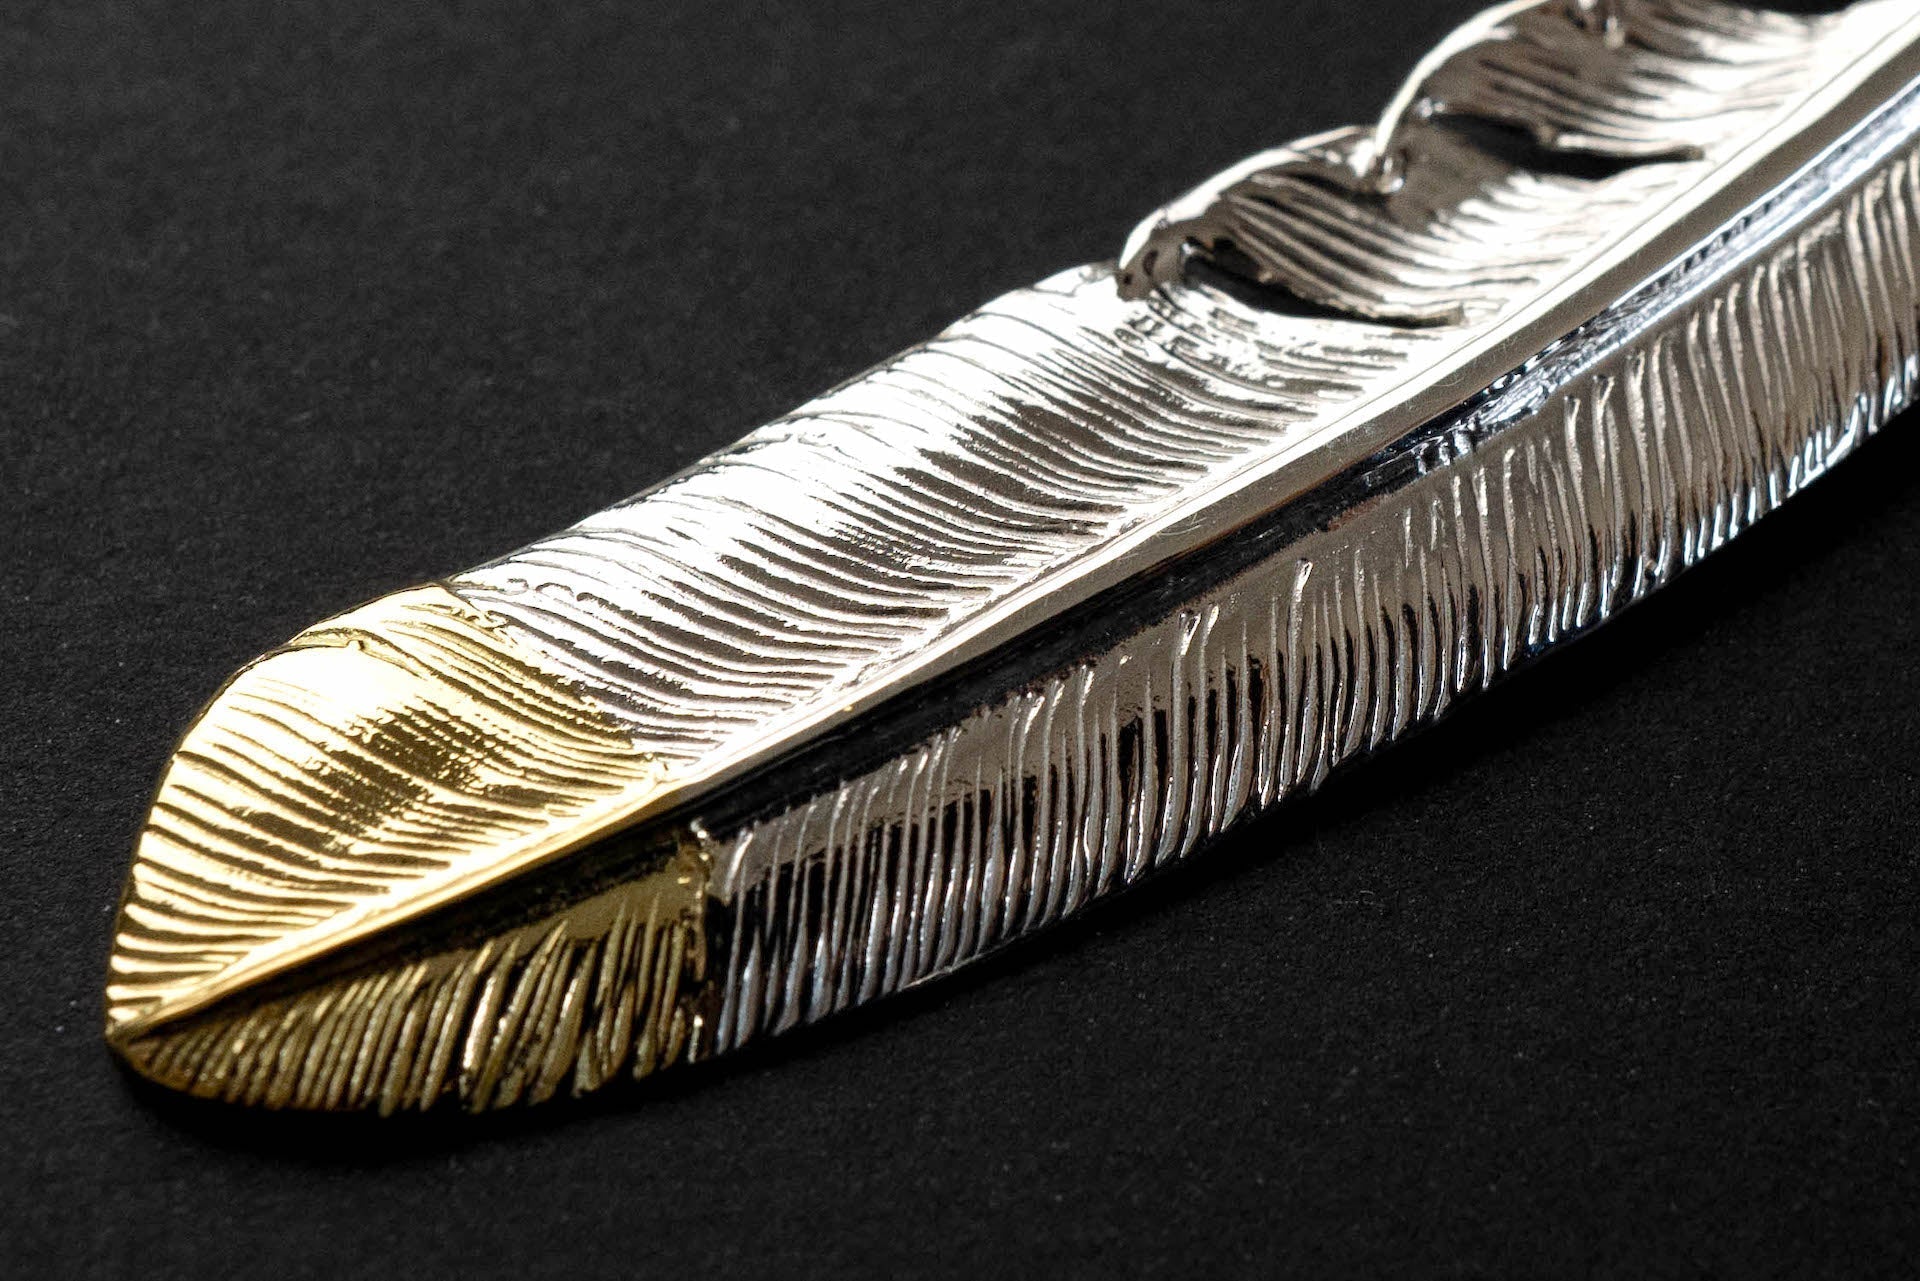 First Arrow's Large Quarter 18k Gold Feather Pendant (P-474)